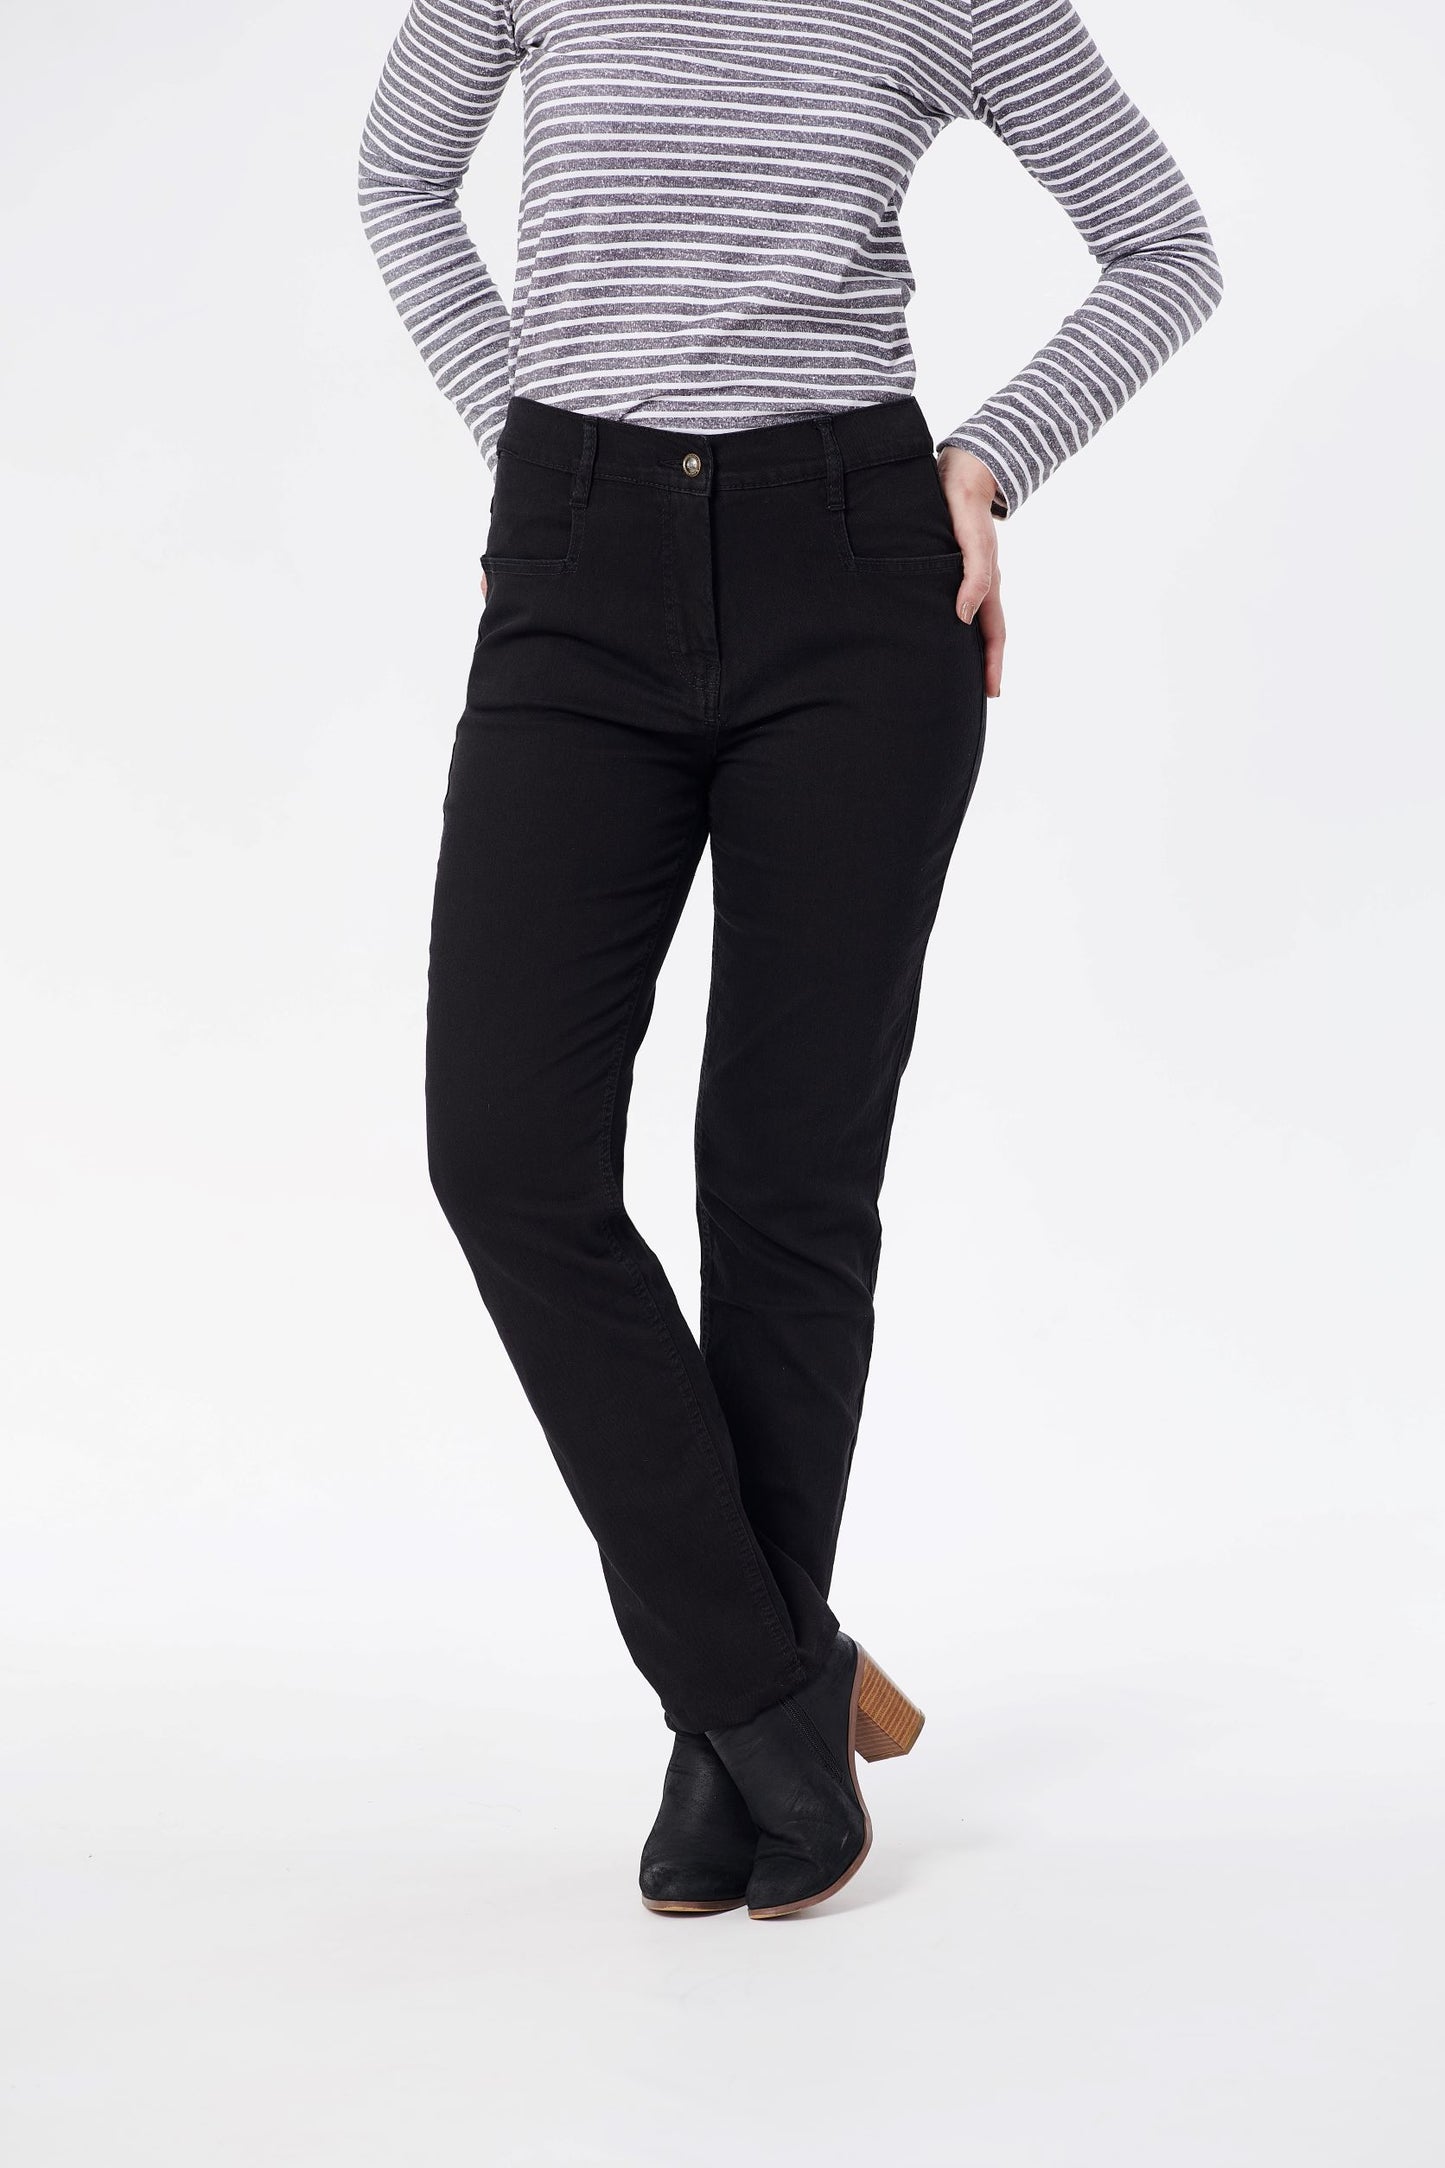 Barrington Annika Side Elastic Jeans Black Denim